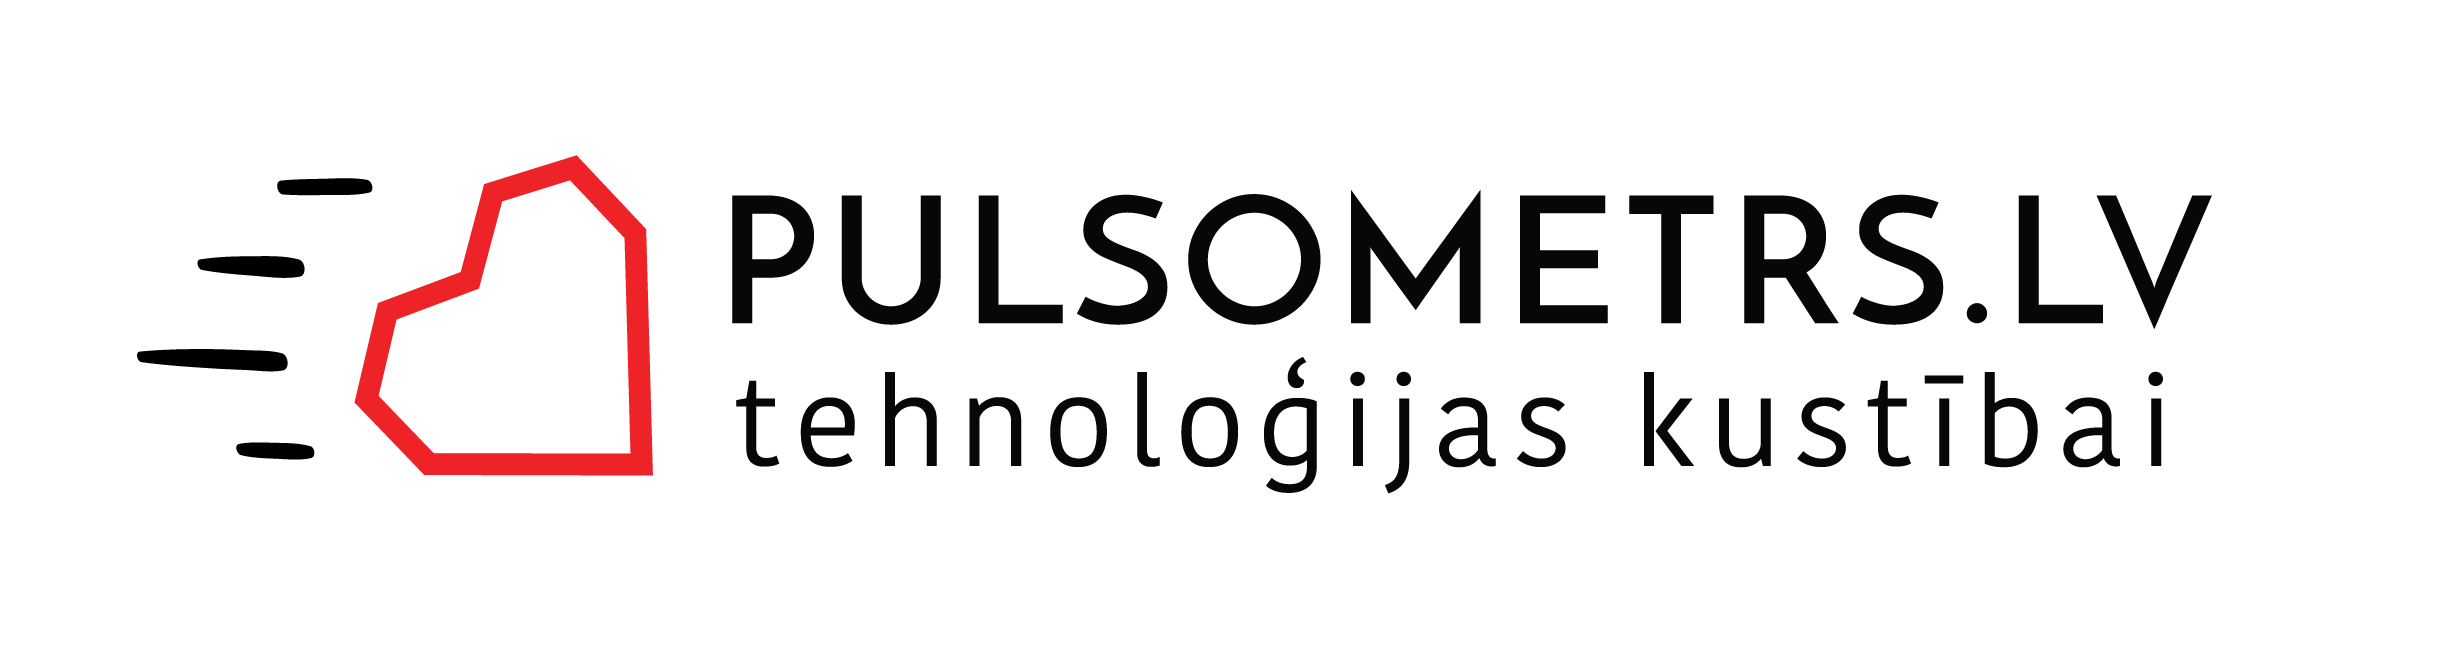 Pulsometrs logo